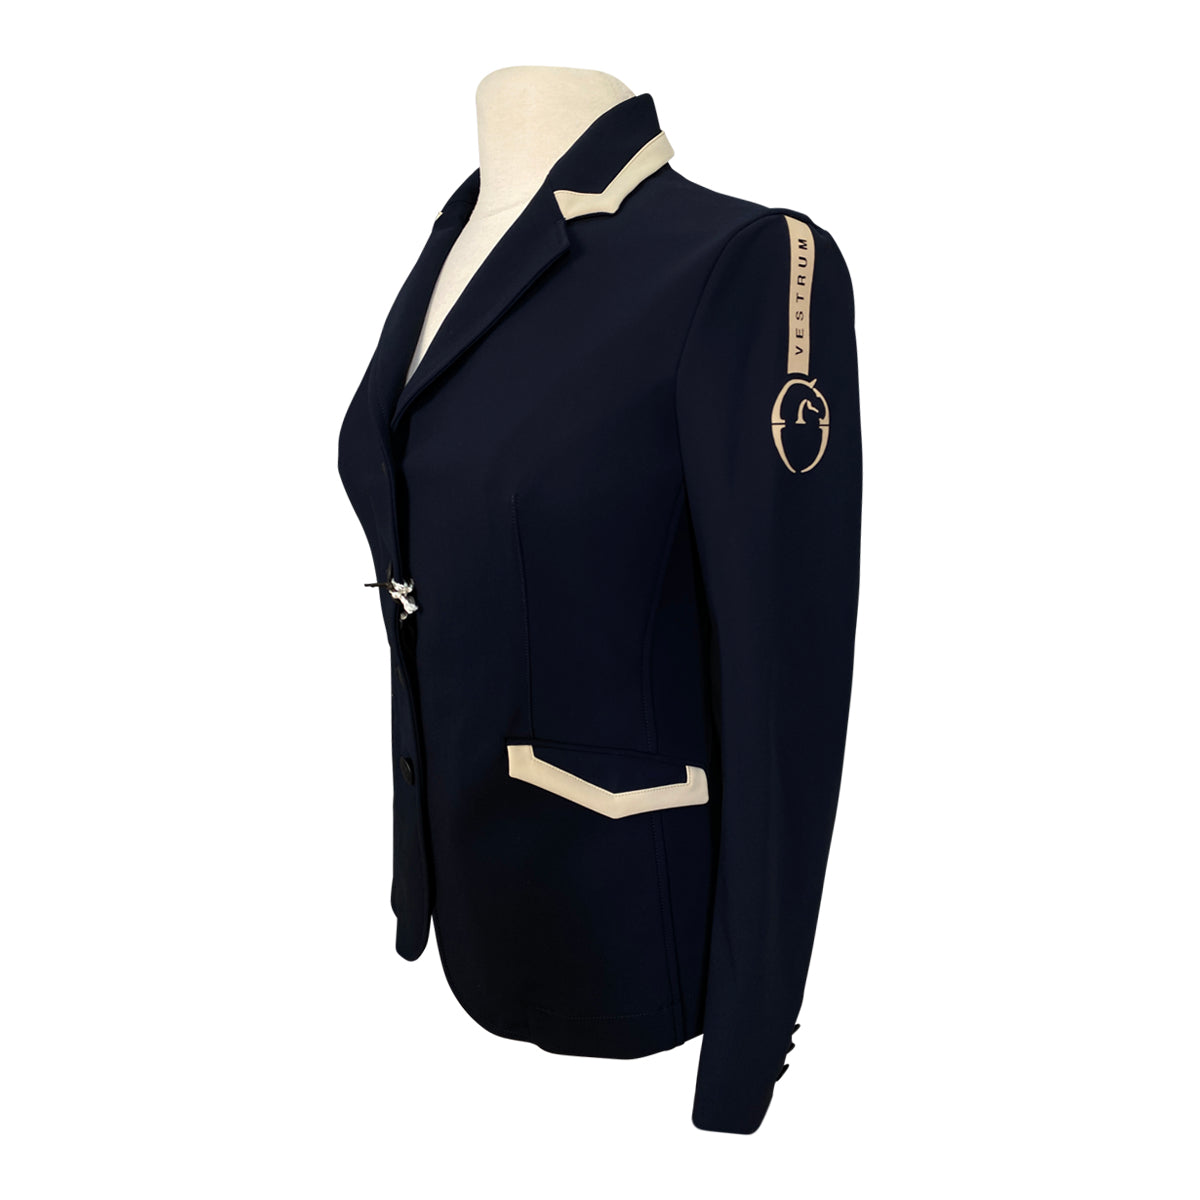 Vestrum 'Alessandria' Competition Jacket in Navy/Beige